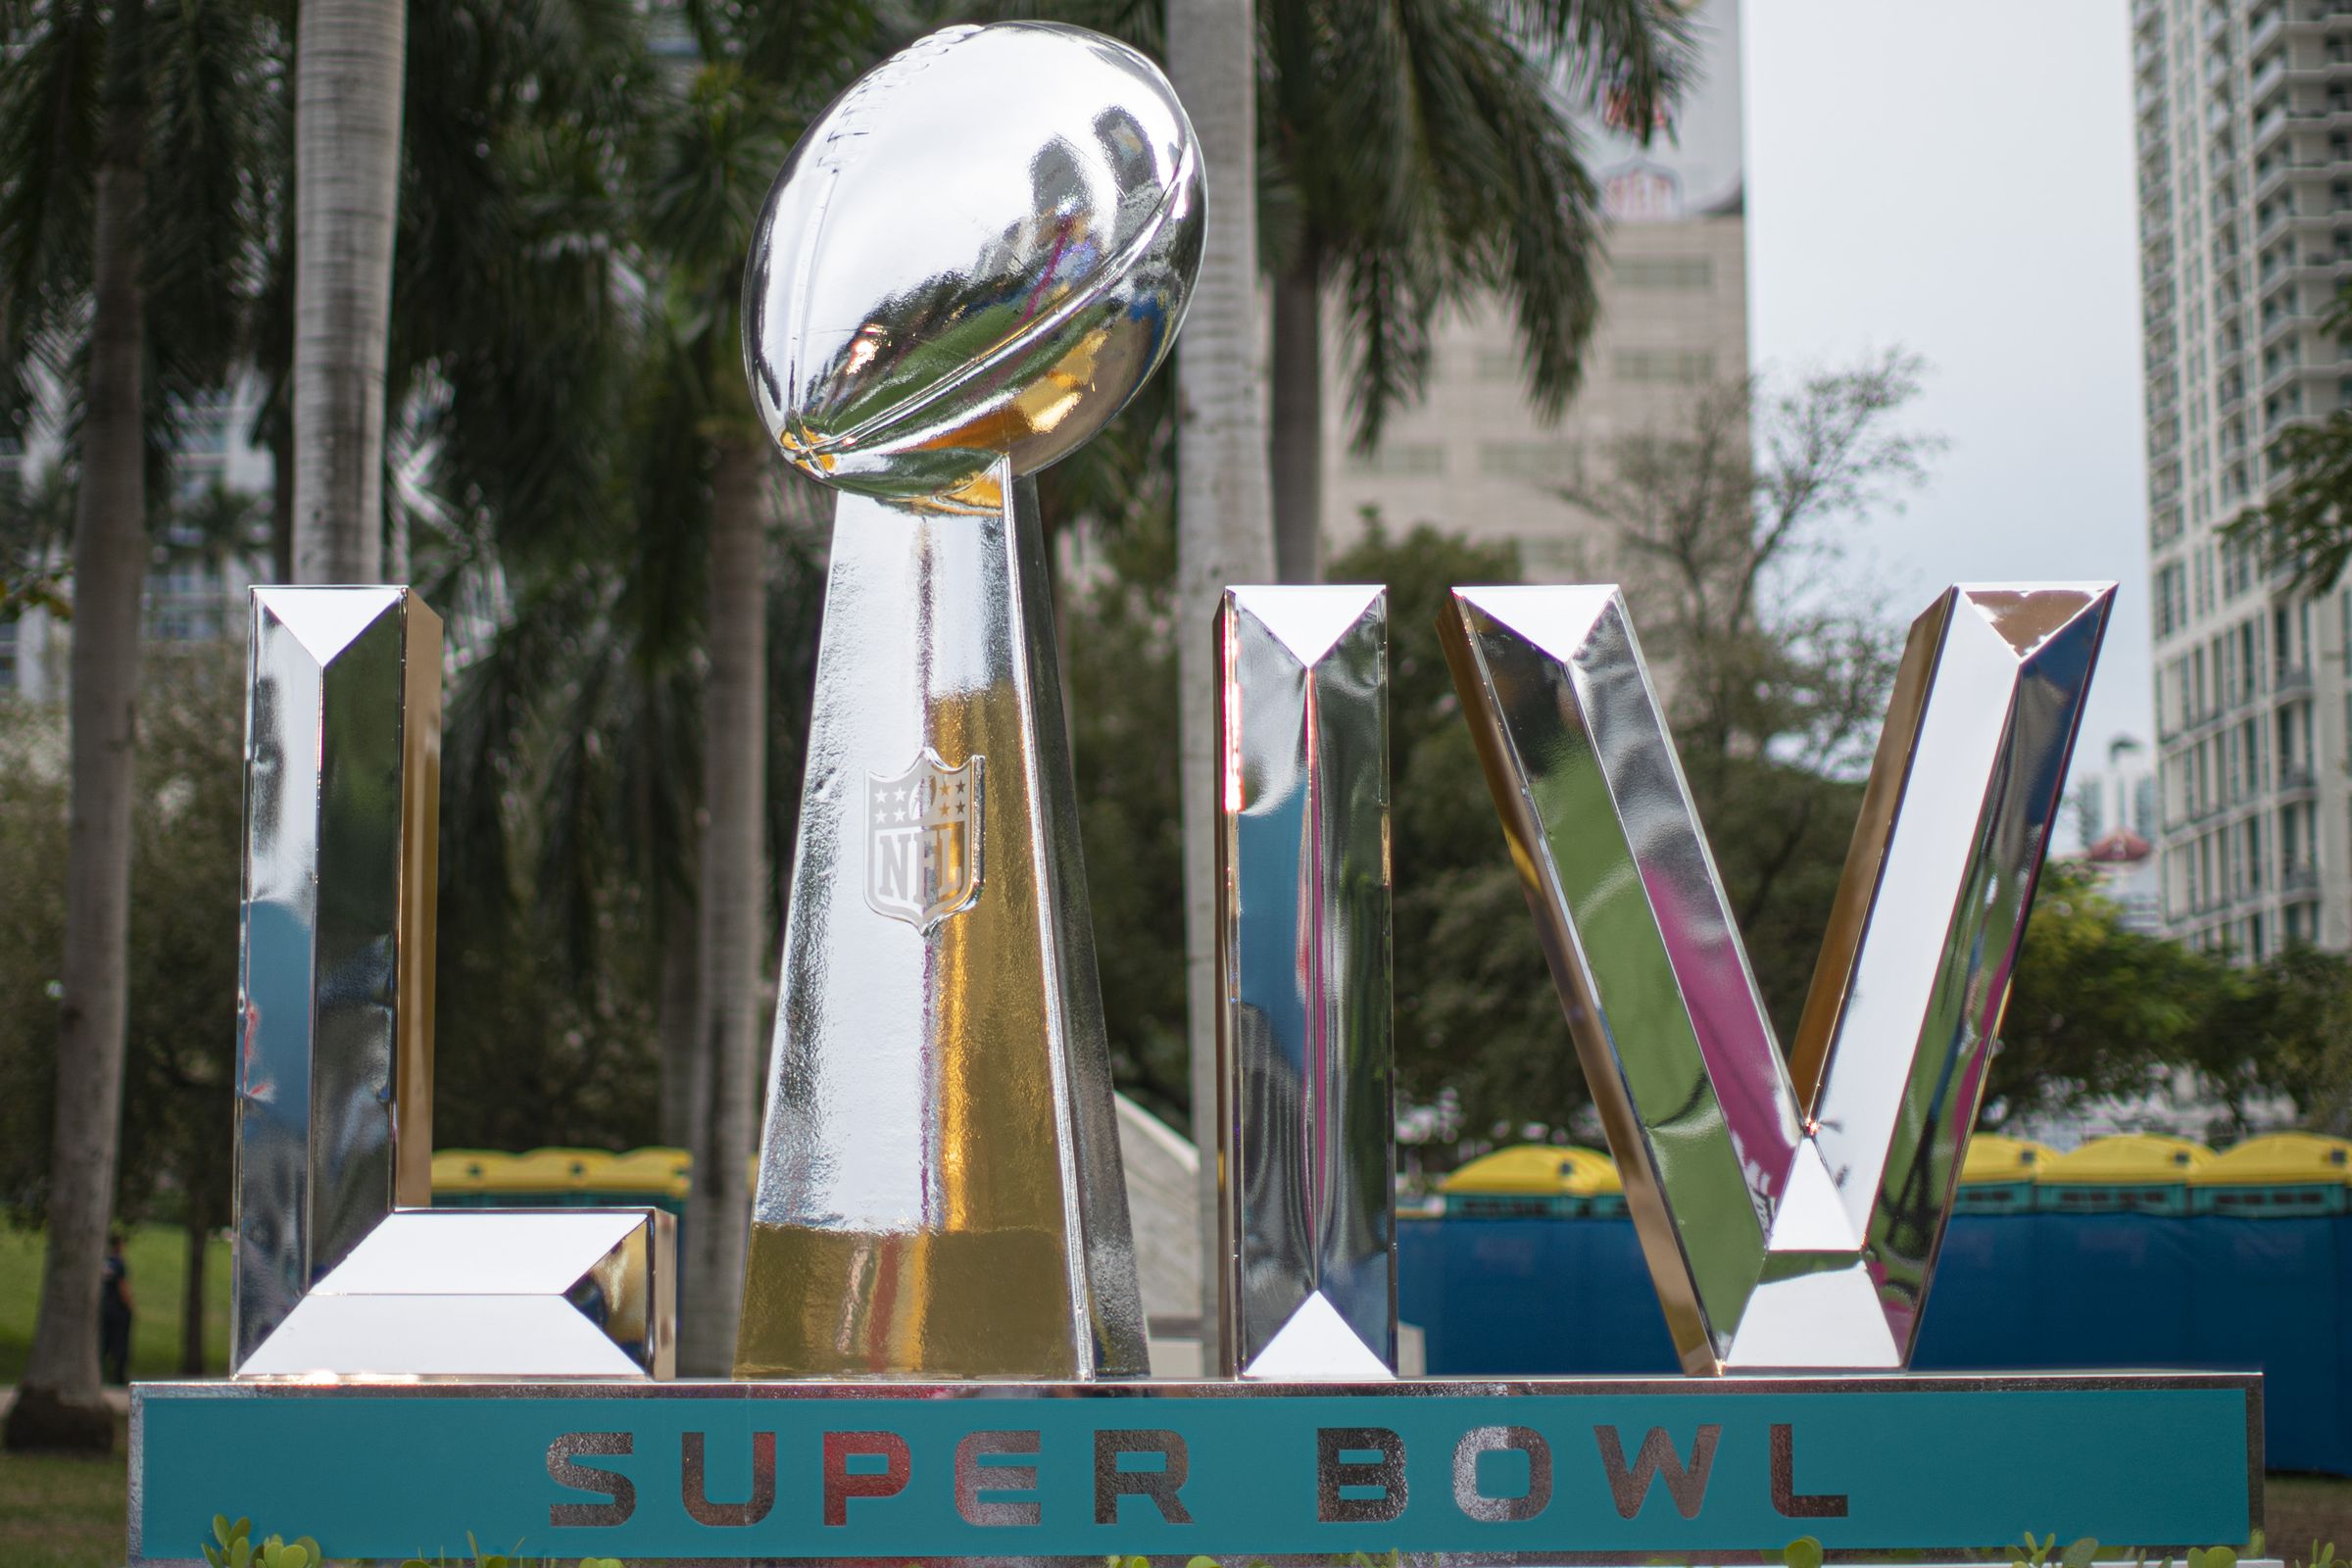 49ers vs. Chiefs Super Bowl XLIV Live zone